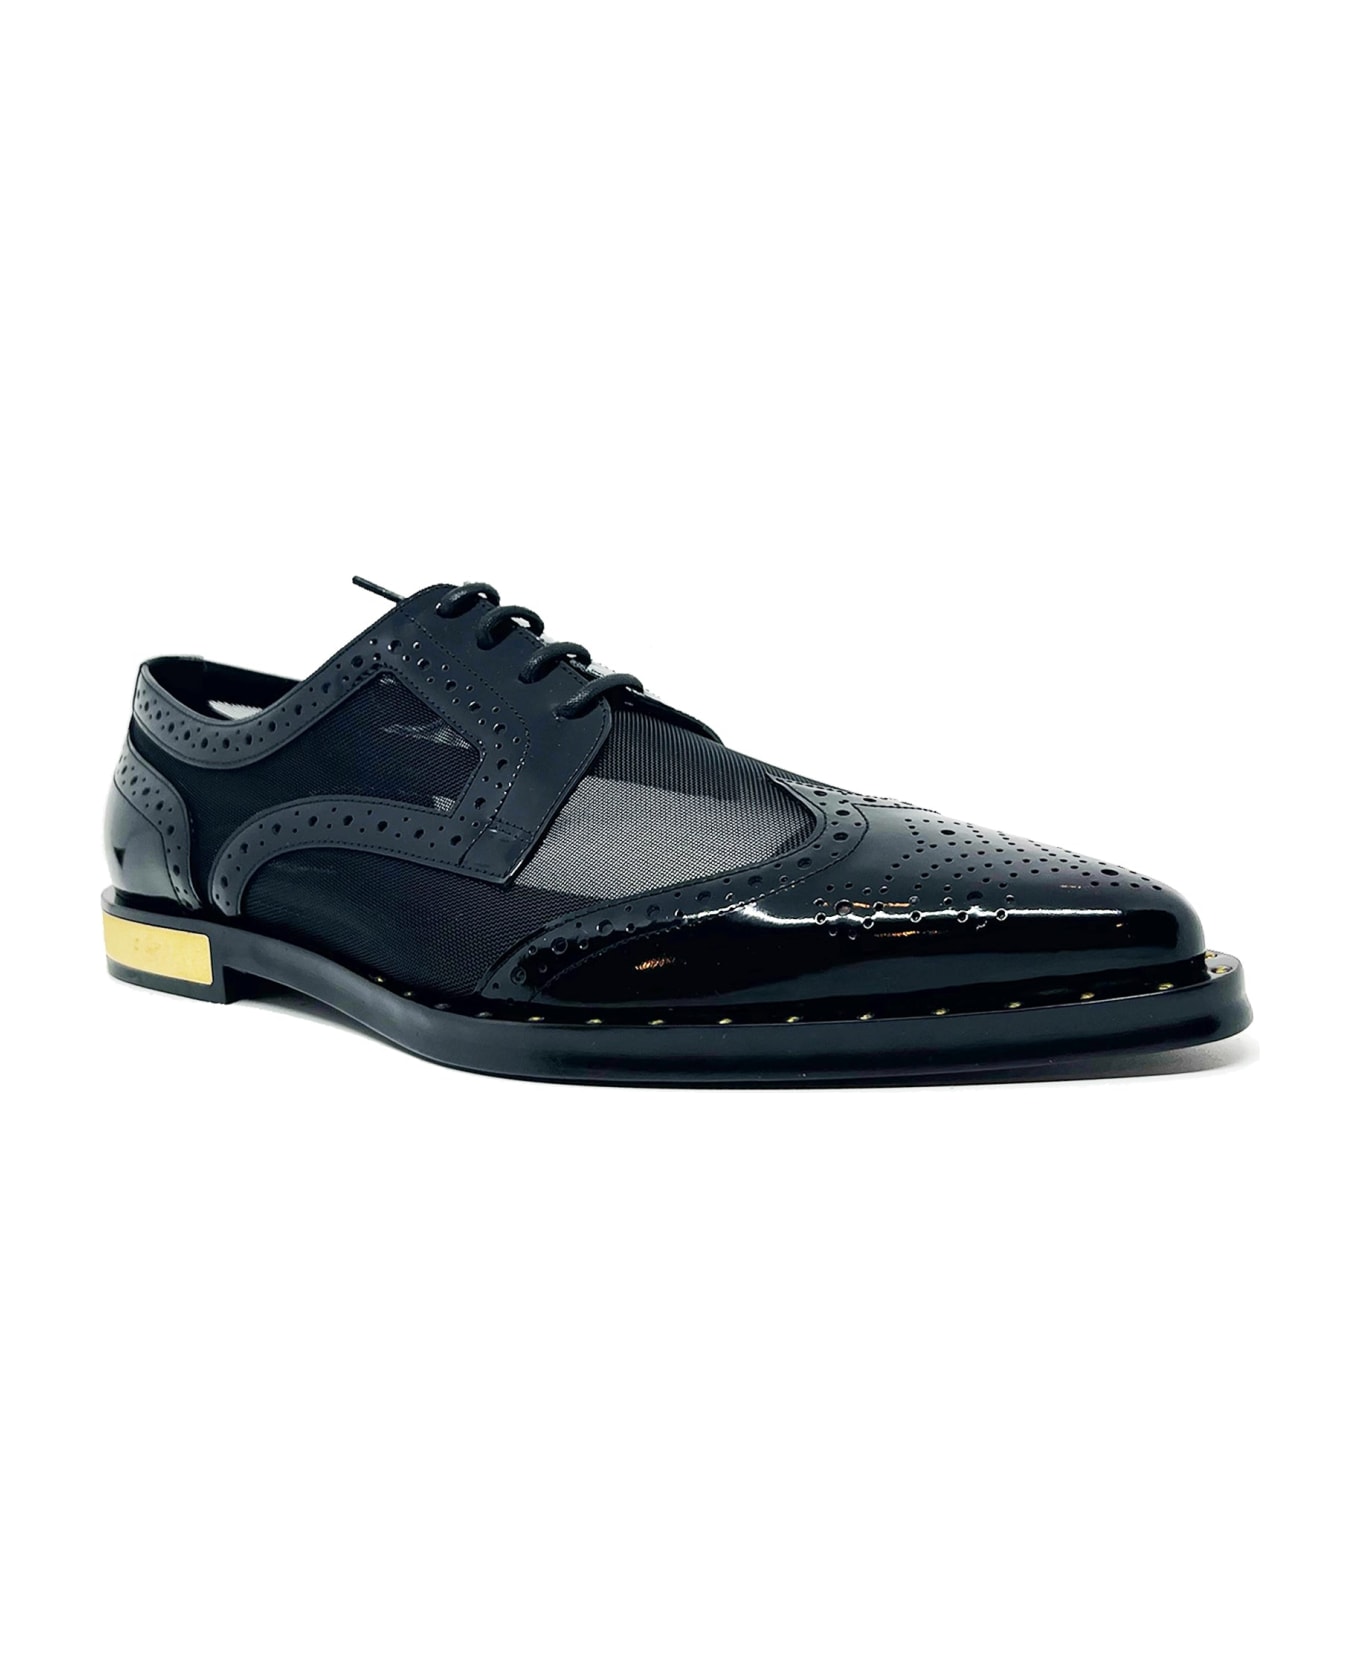 Dolce & Gabbana Millenials Leather Flats - Black フラットシューズ